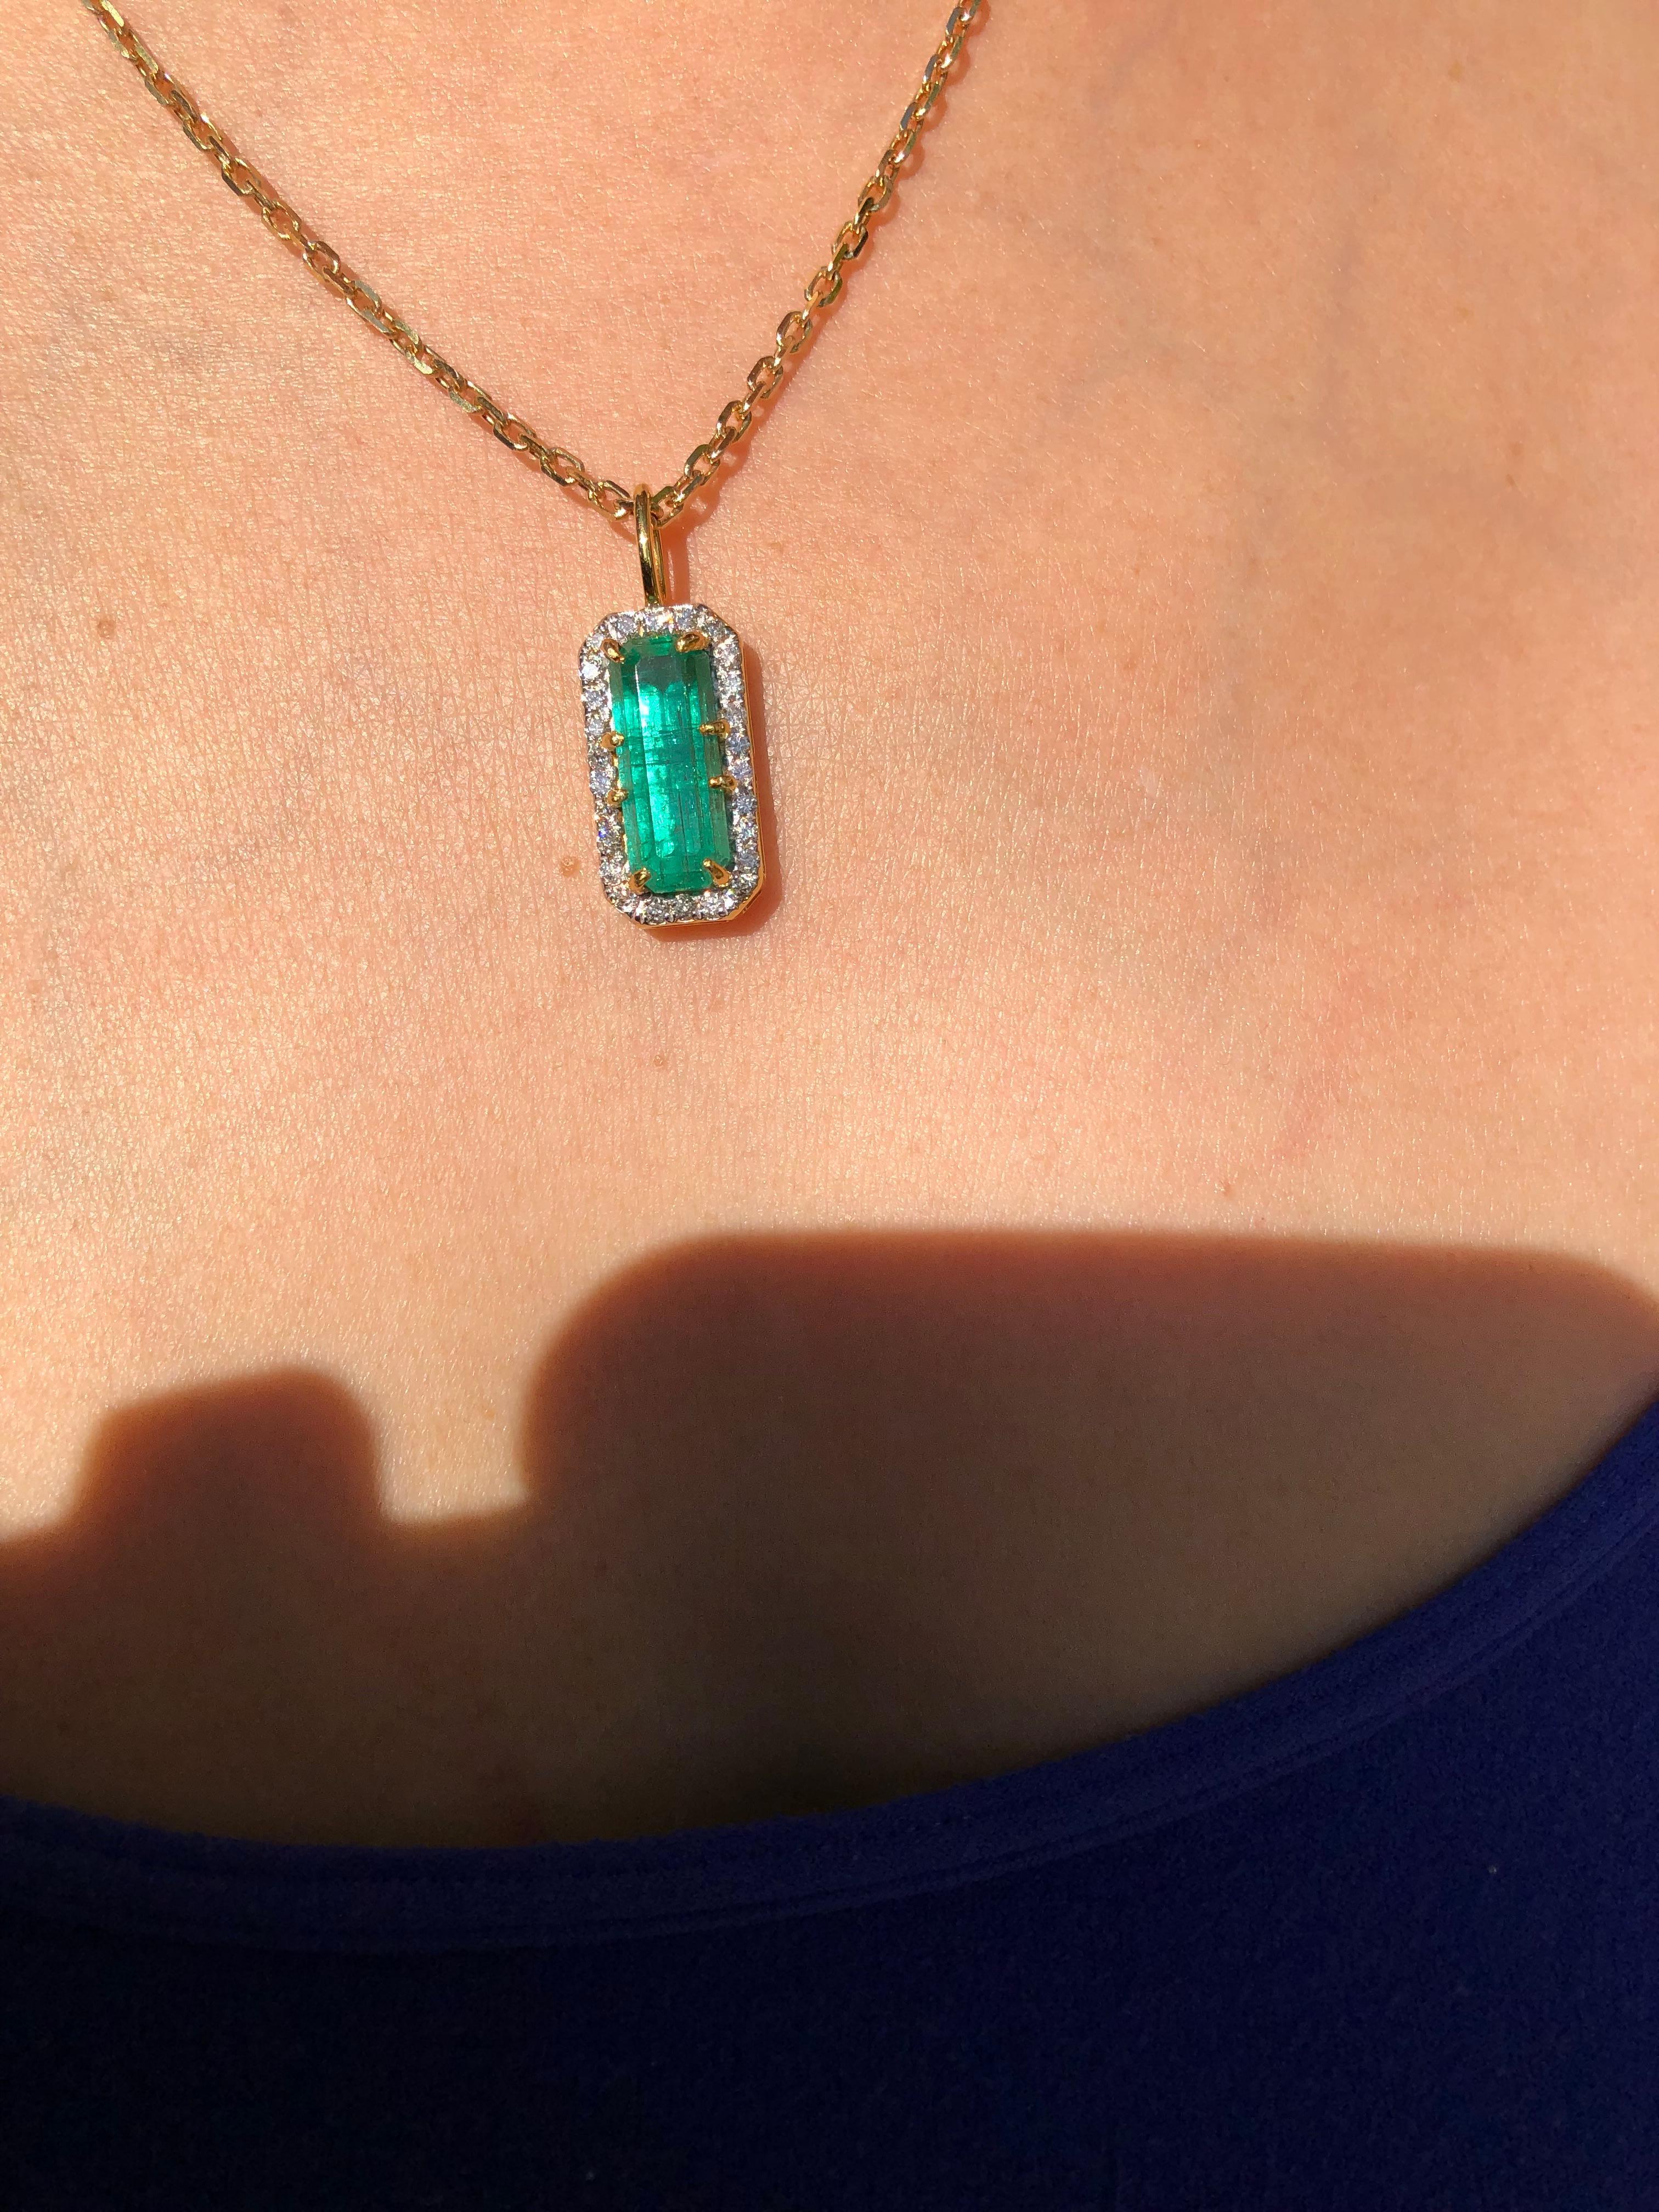 Stunning 4.72 Afghan Emerald Pendant with Diamond Halo 7